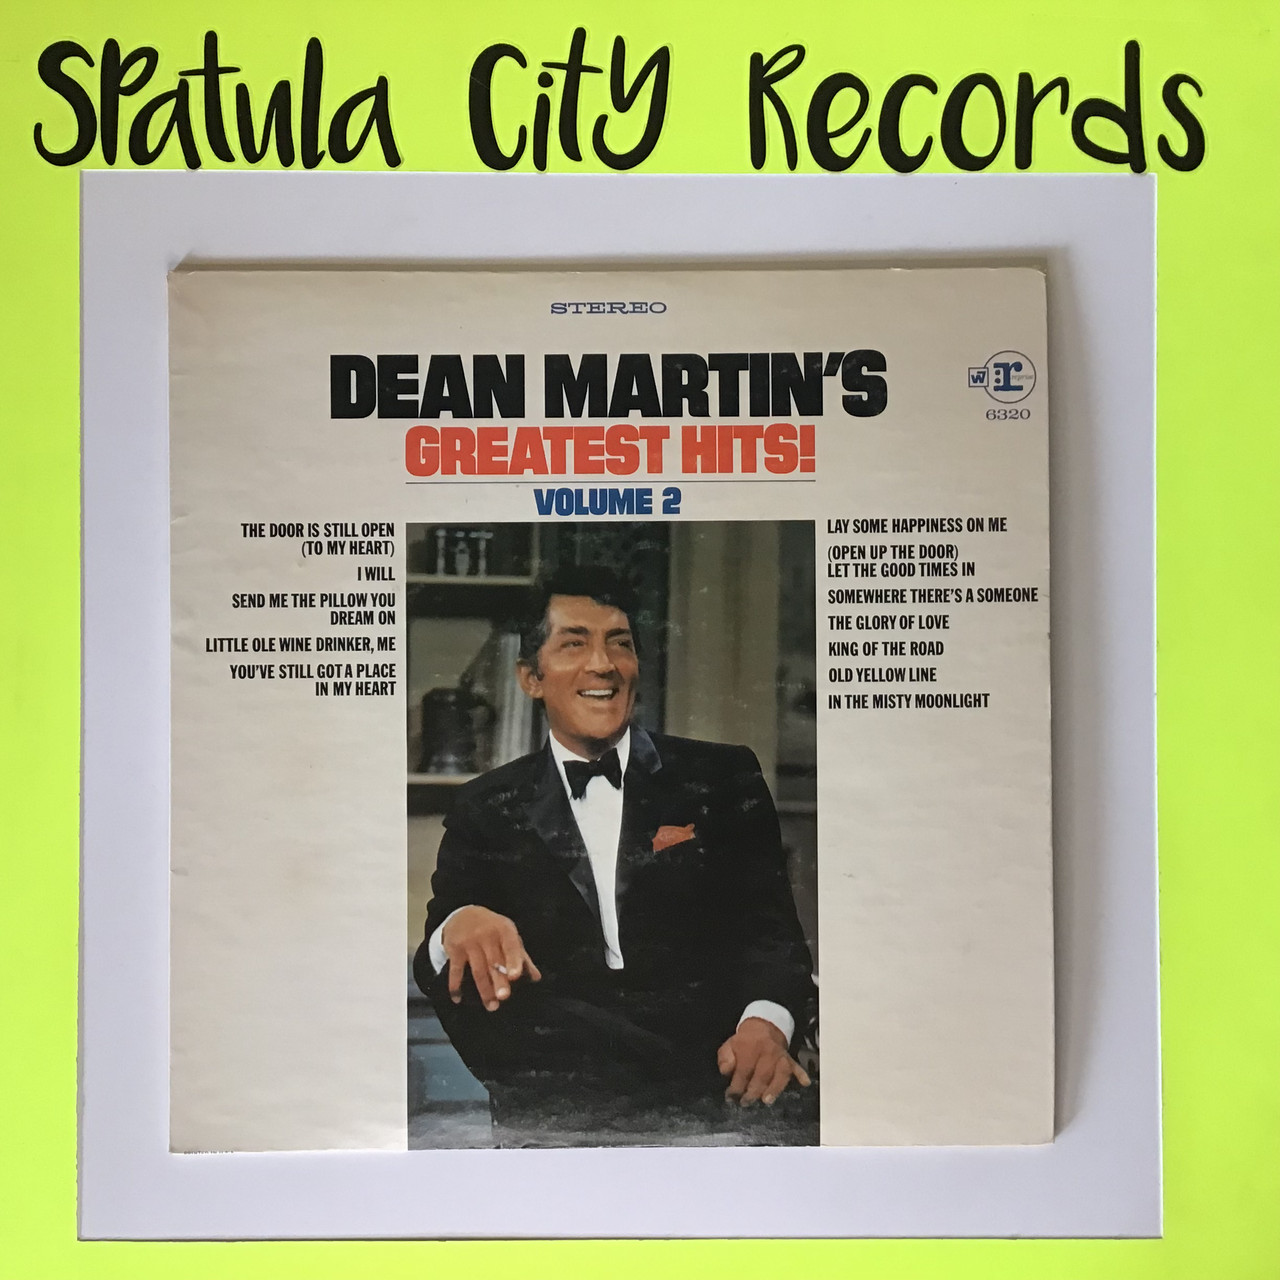 Dean Martin - Dean Martin's Greatest Hits Volume 2 - vinyl record album LP